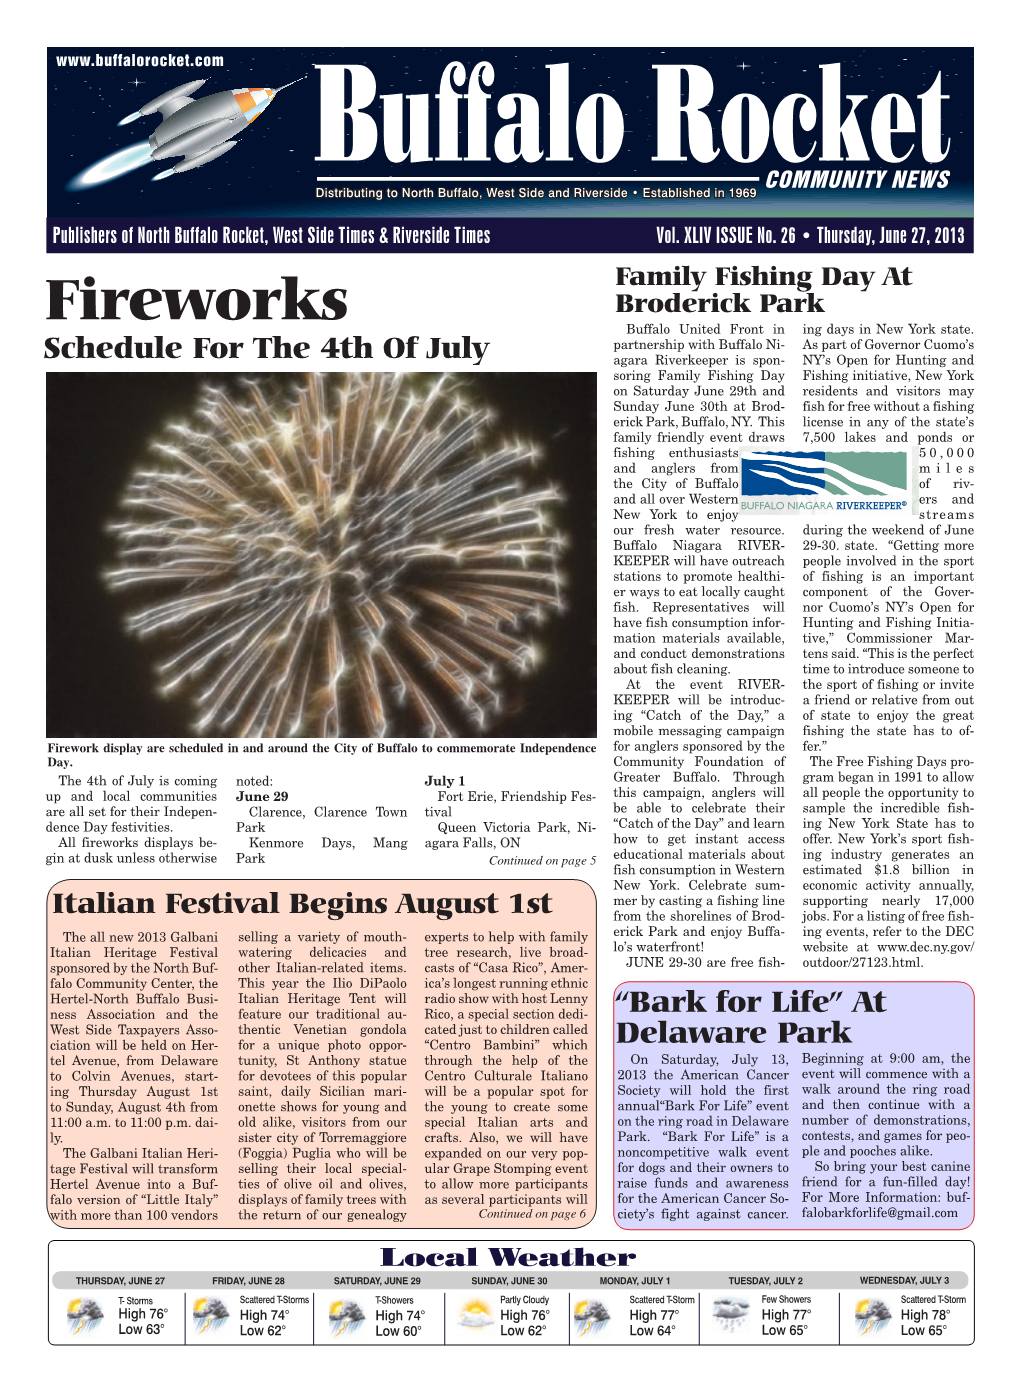 2013 Buffalo Rocket Issue 26 Page 